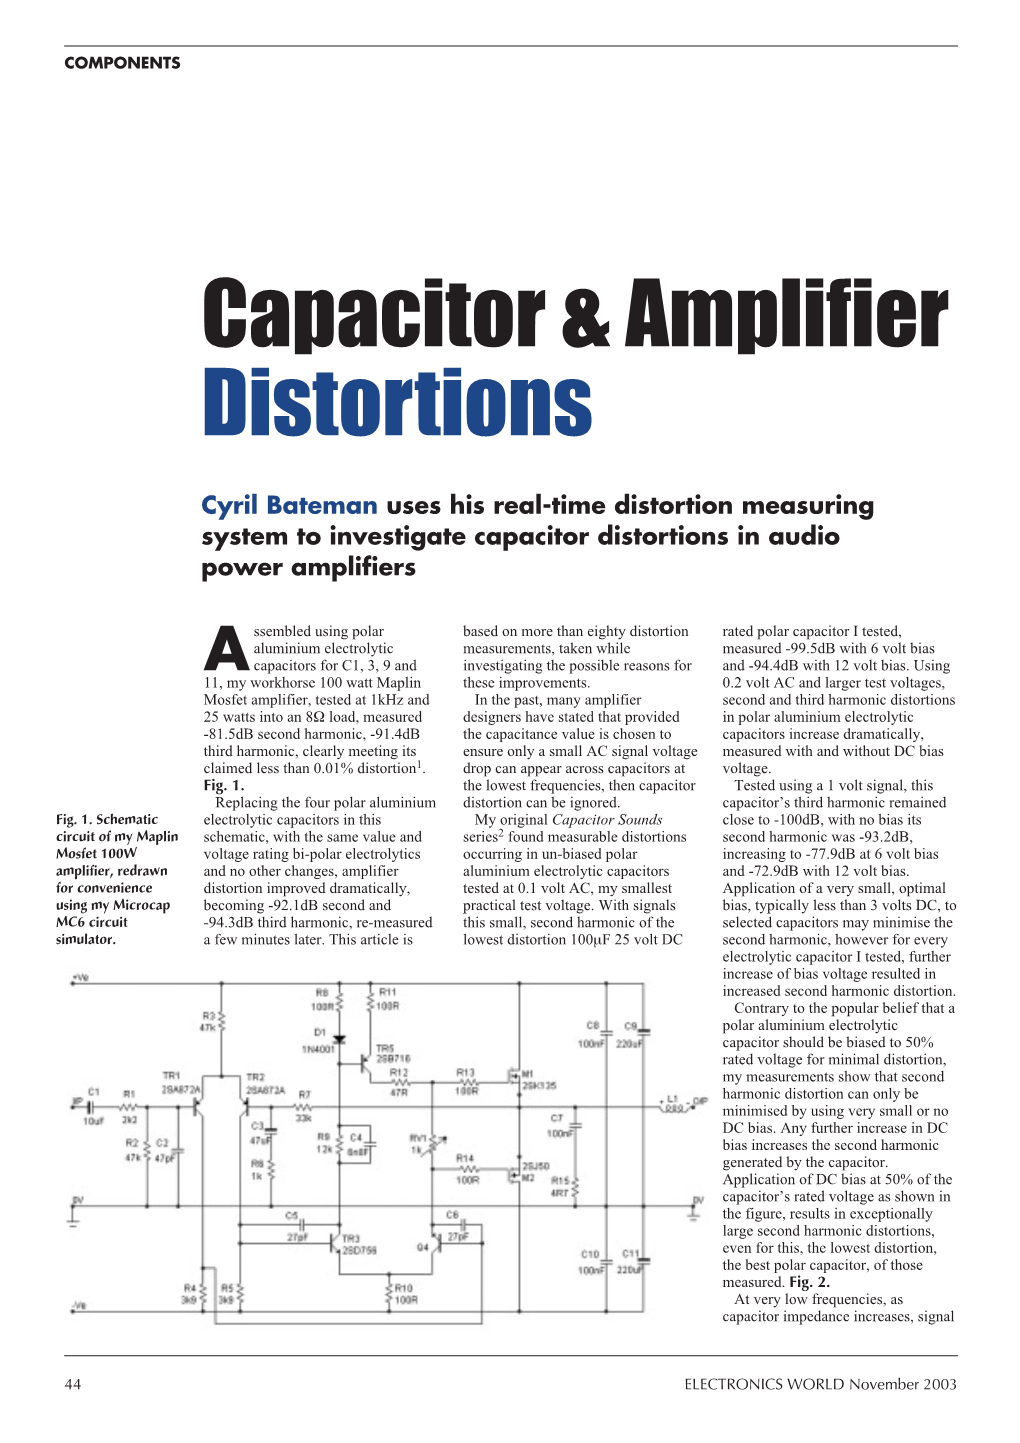 Capacitor & Amplifier Distortions